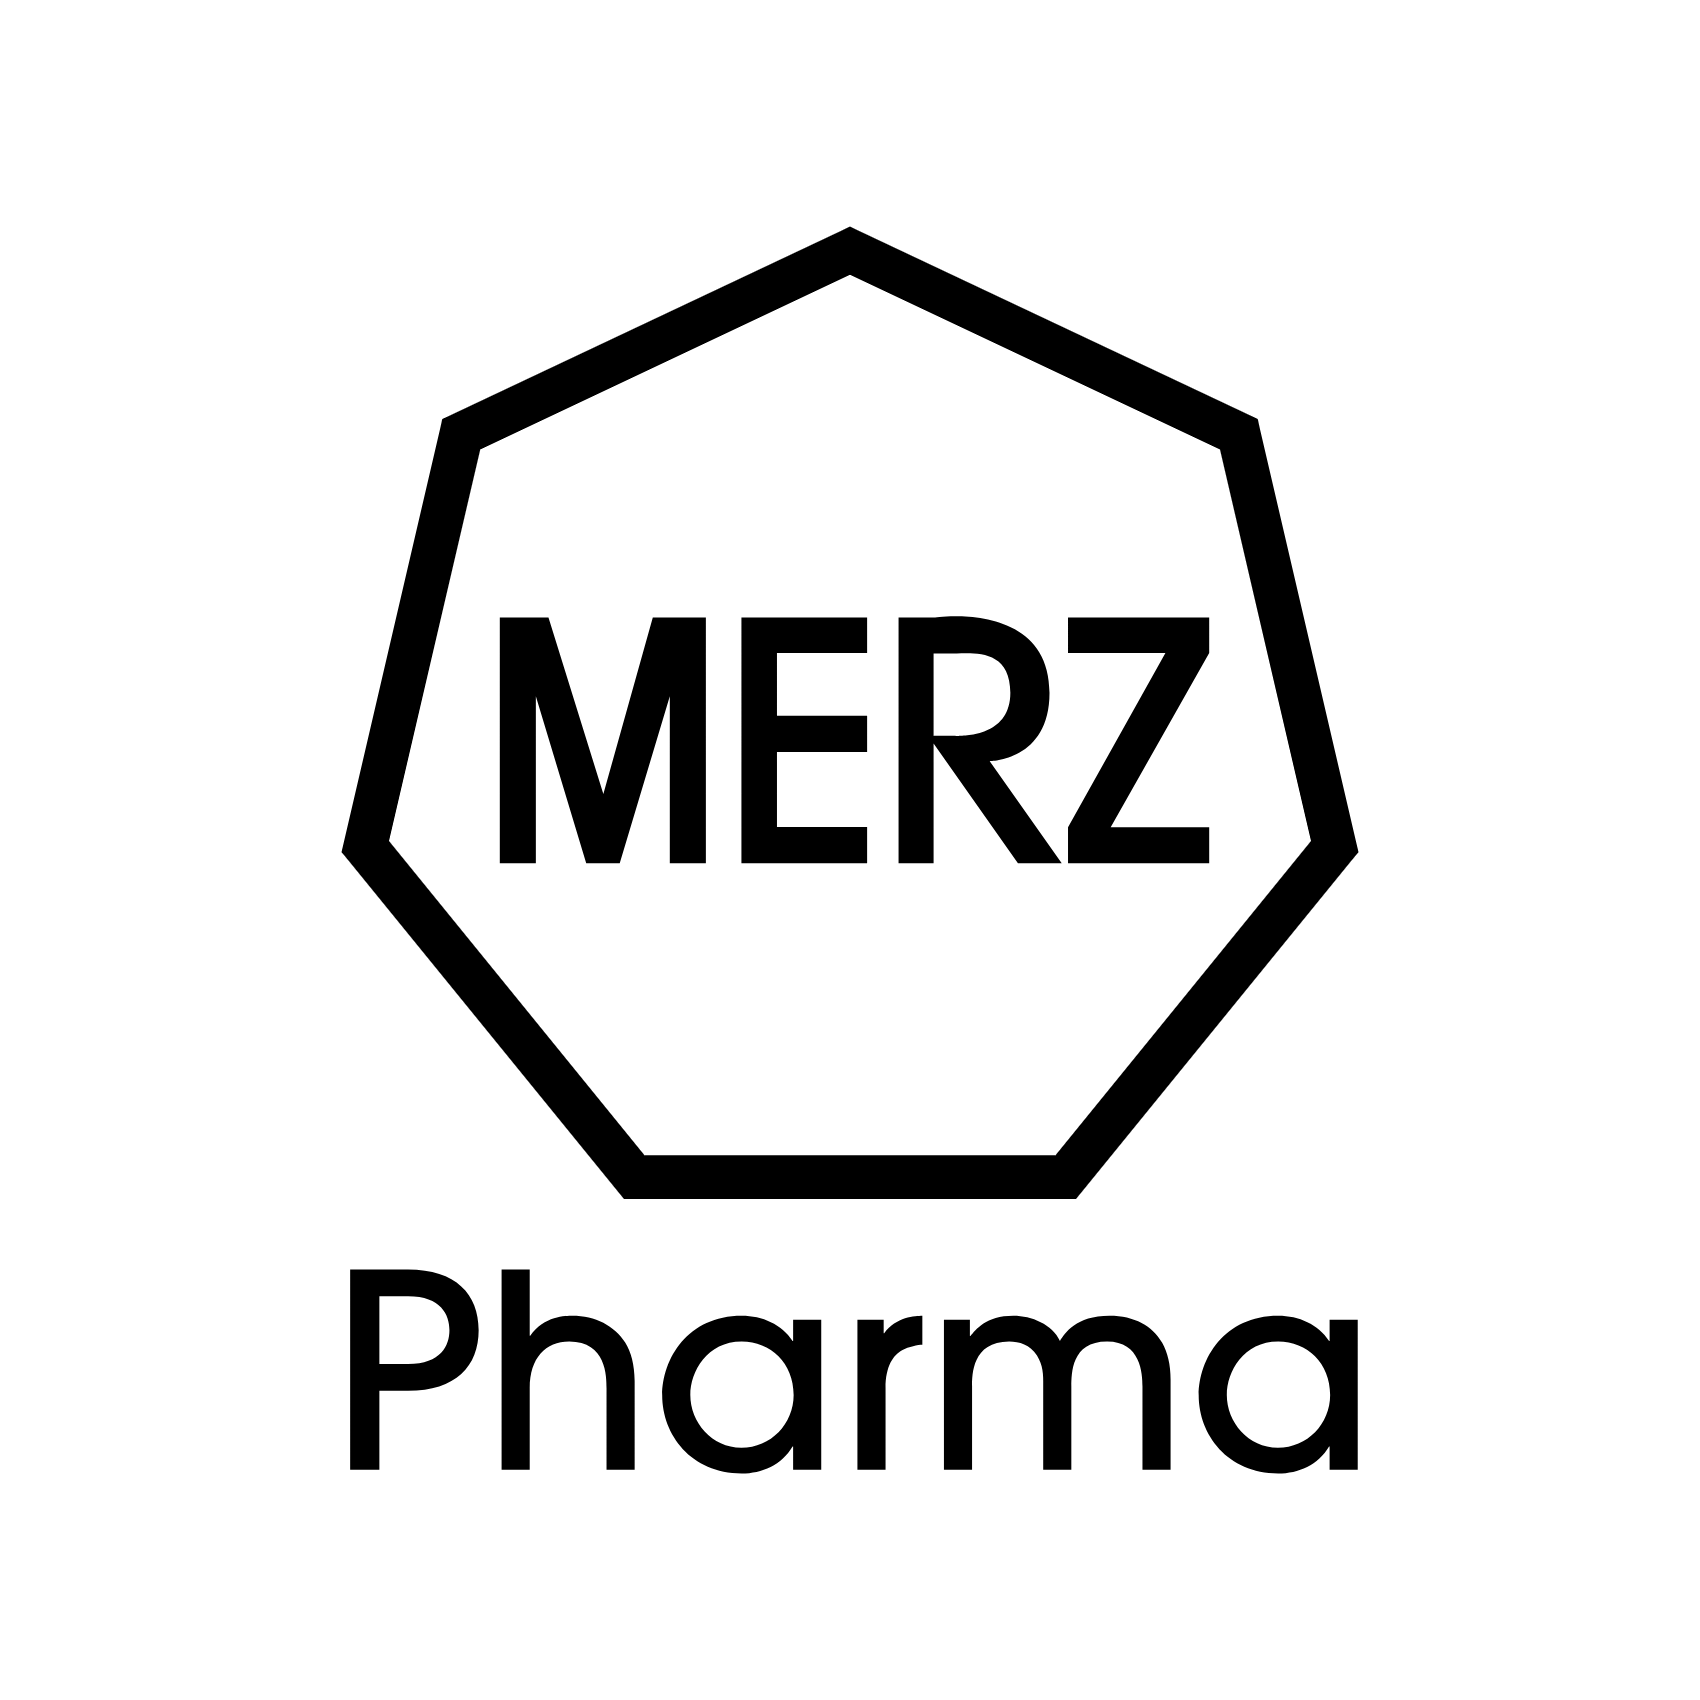 Merz Pharma